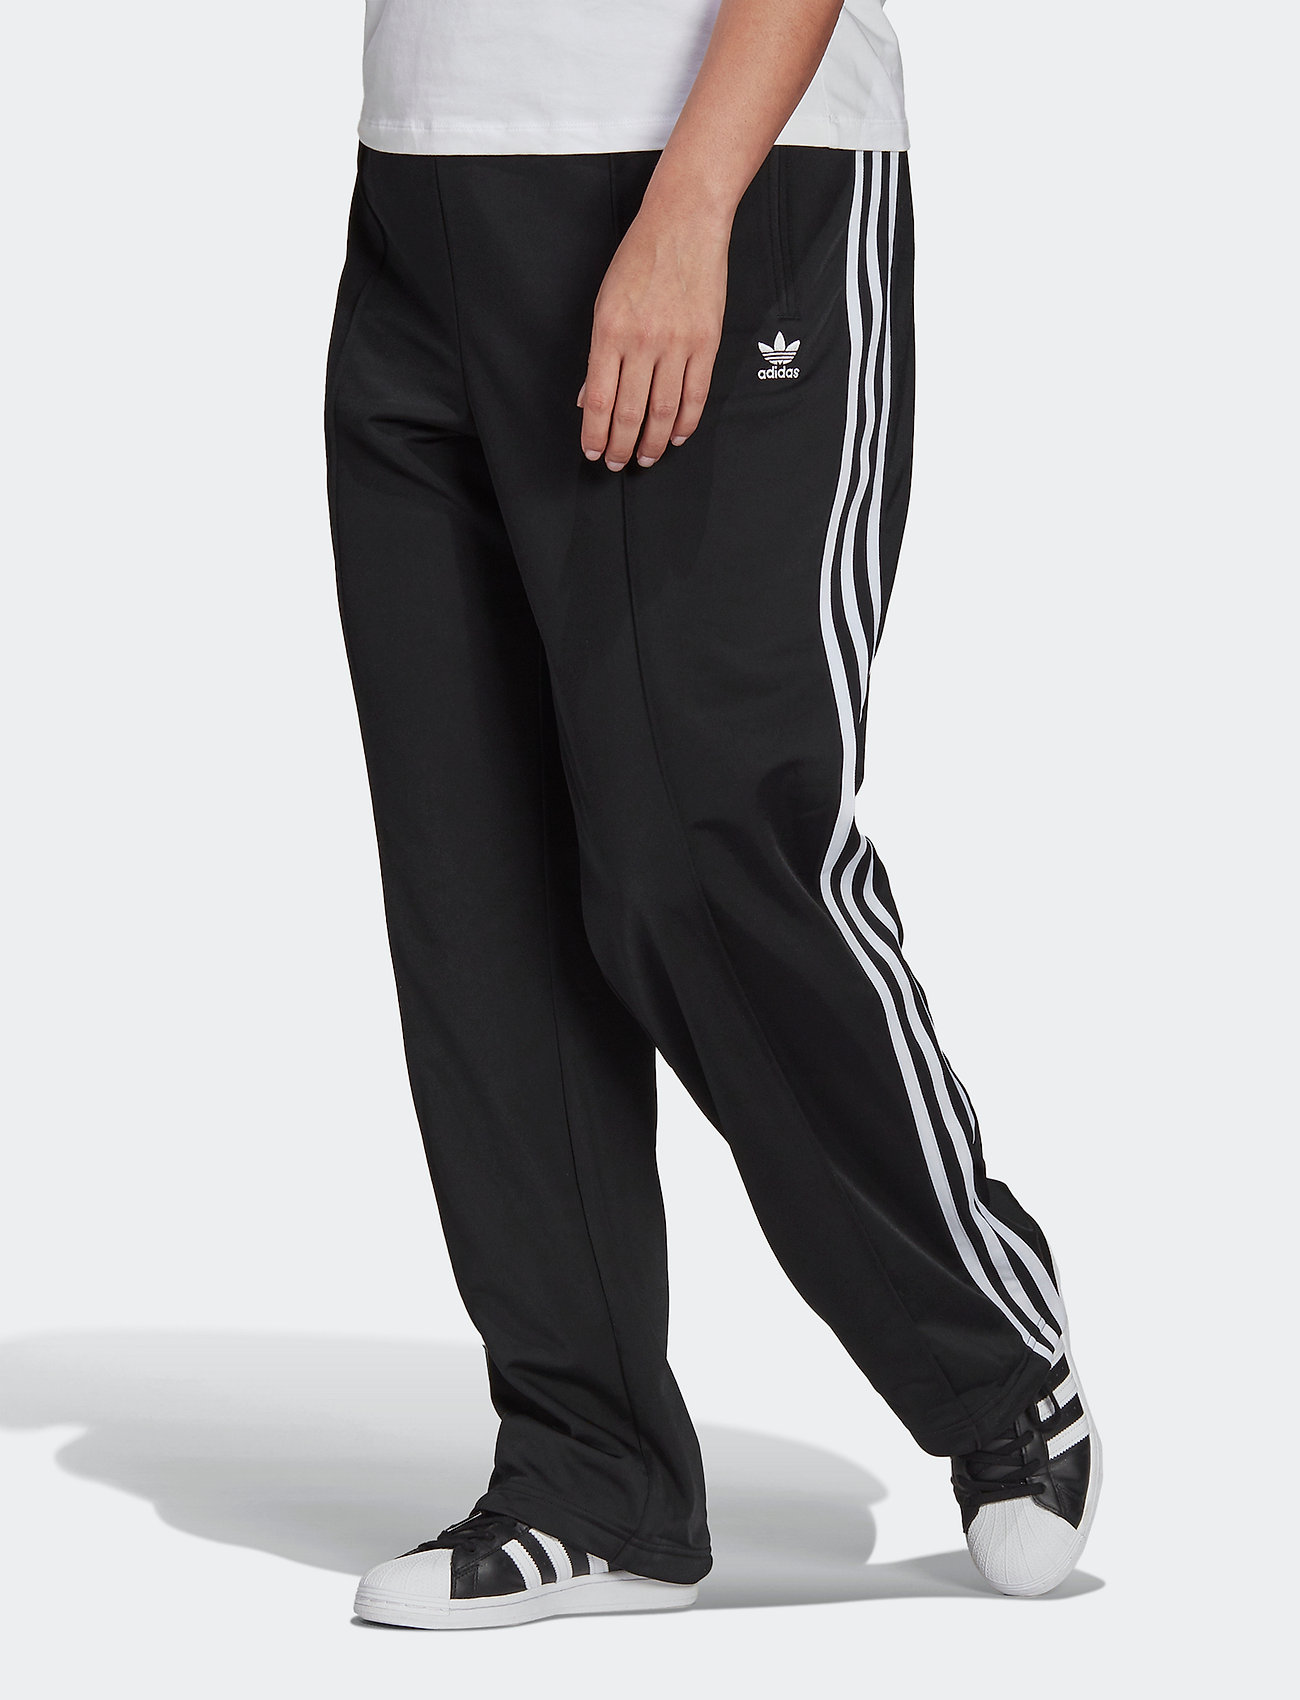 adidas Originals mens Adicolor Classics Firebird Track Pants Black  XSmall US  Amazonin Clothing  Accessories